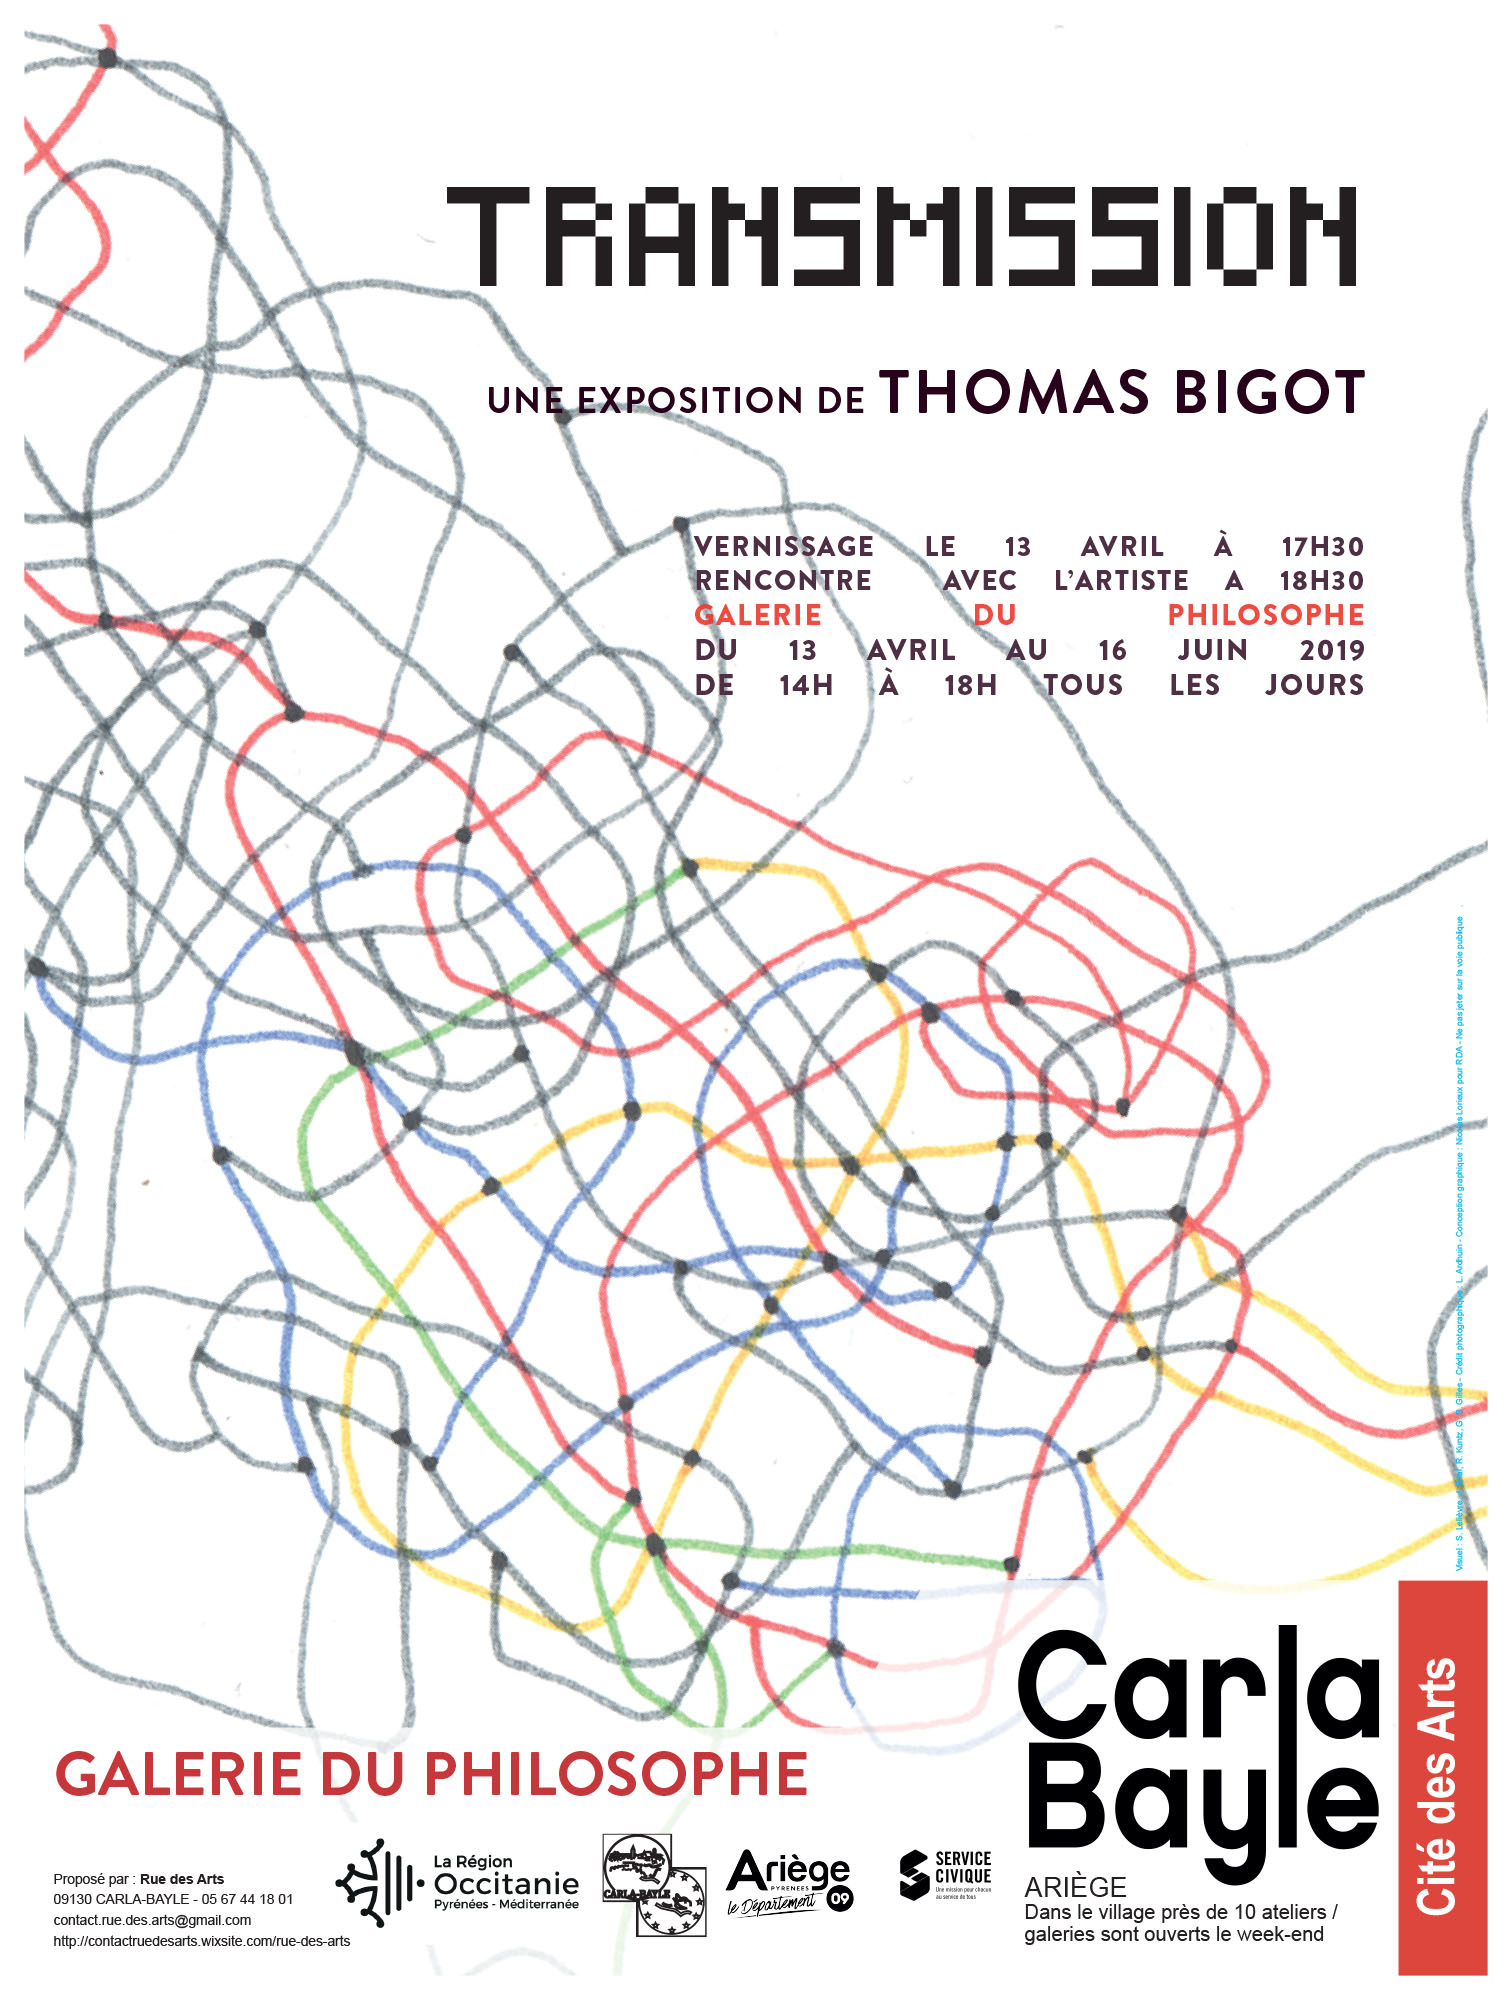 "TRANSMISSION" une installation de Thomas Bigot